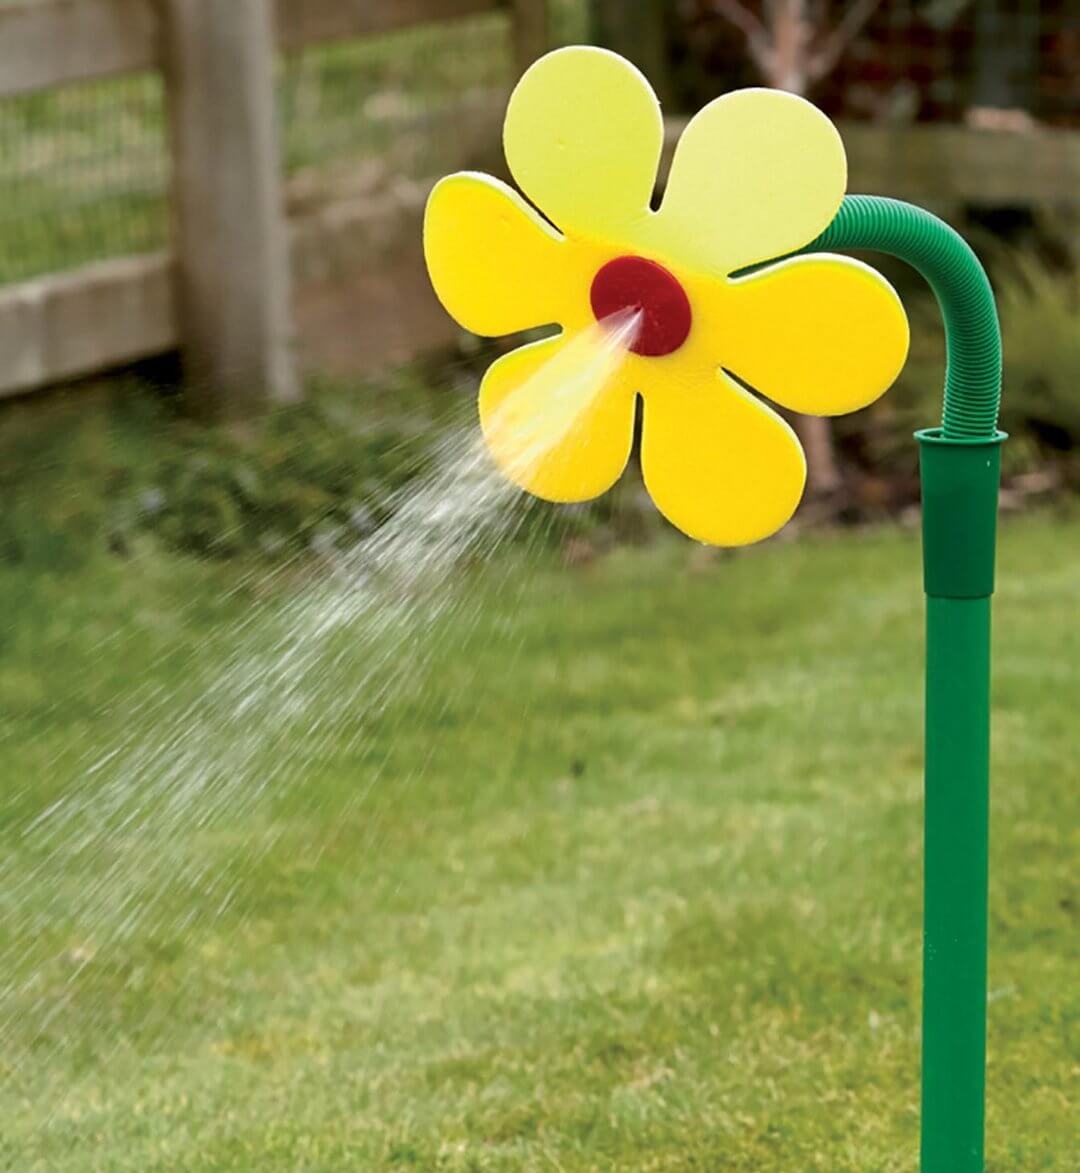 Sunflower Shaped Garden Watering Can